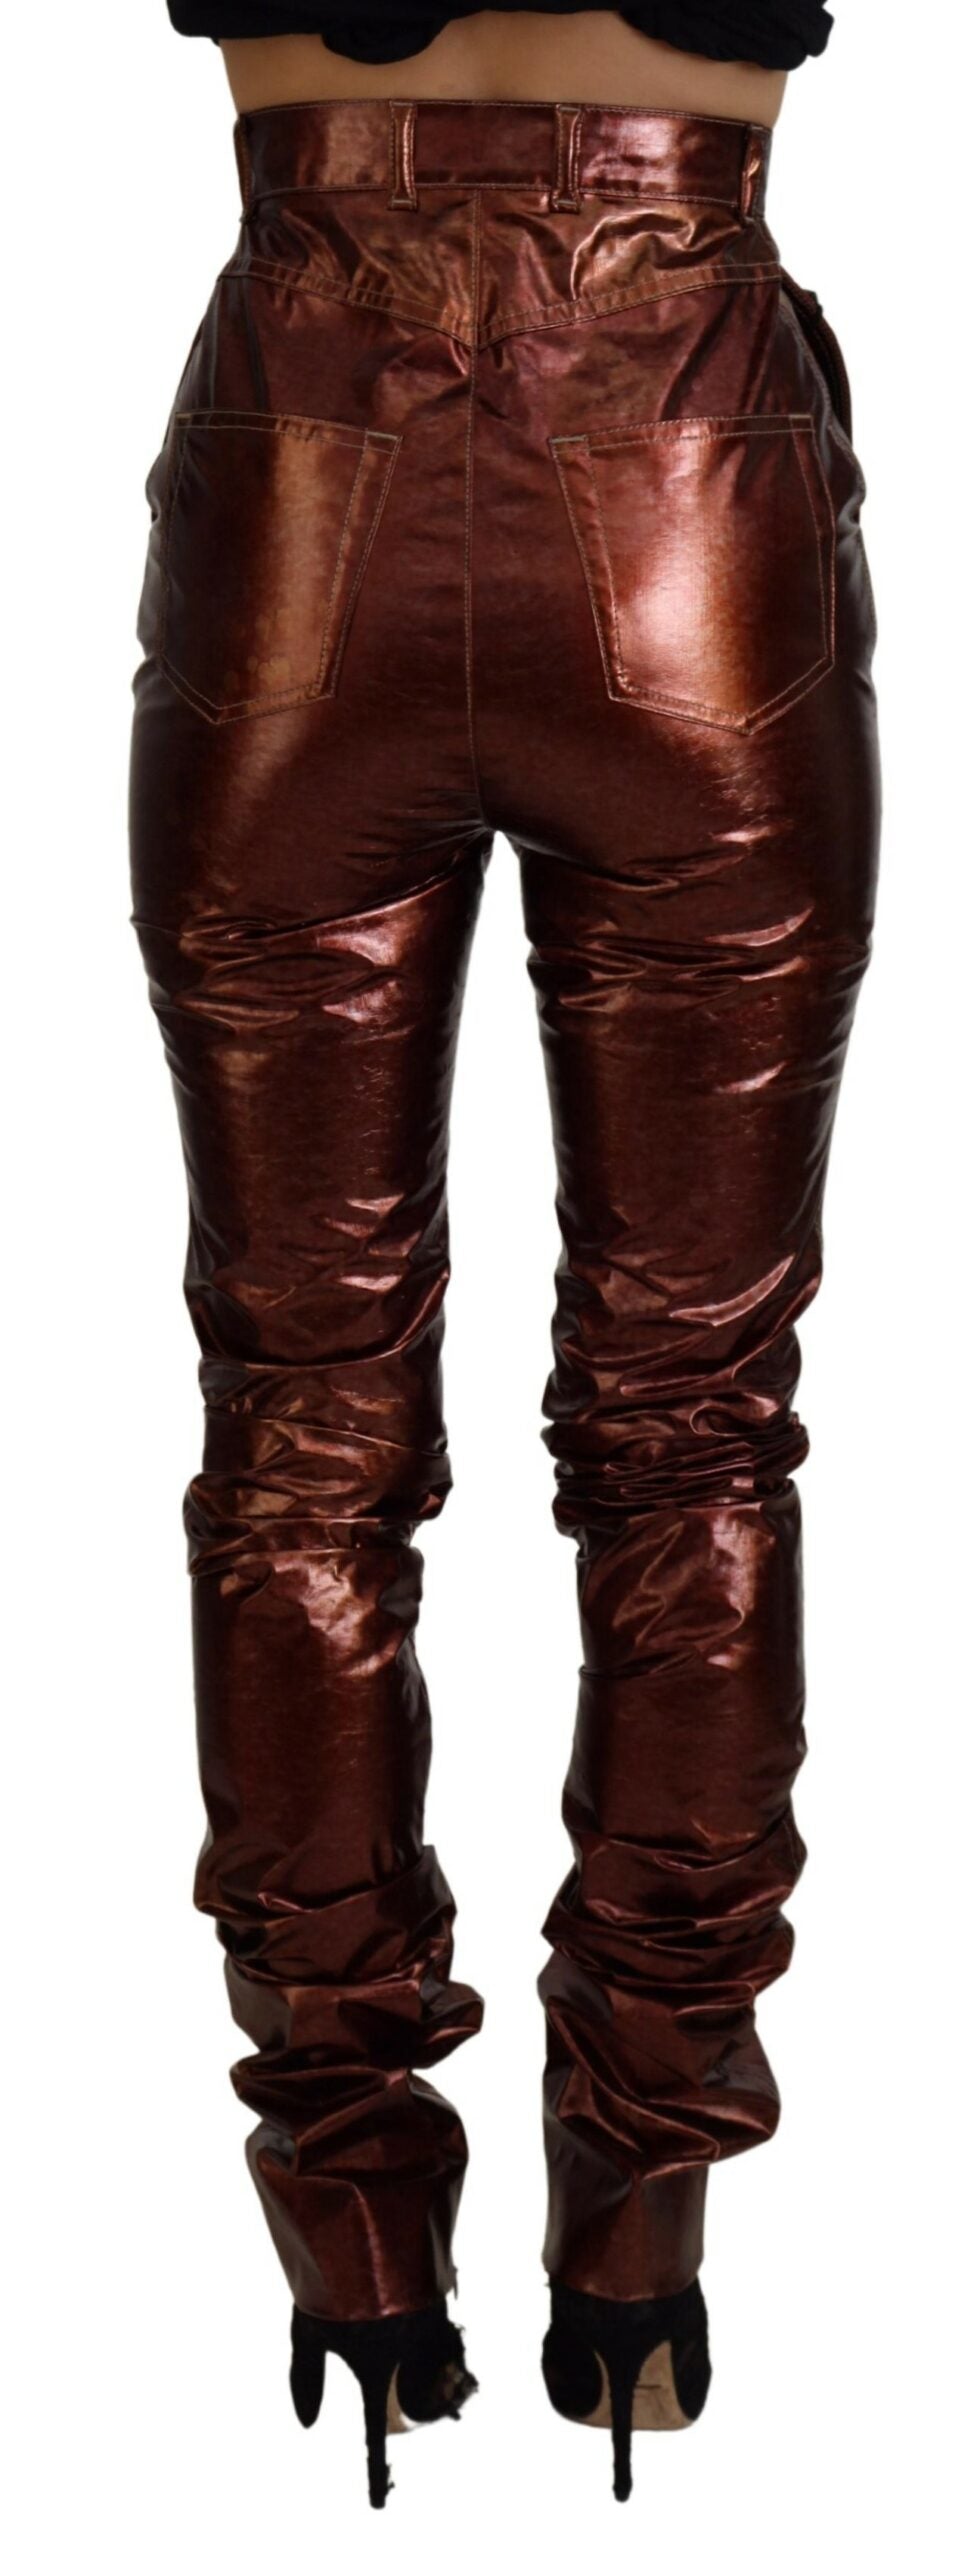 Dolce & Gabbana High Waist Skinny Jeans in Metallic Bronze